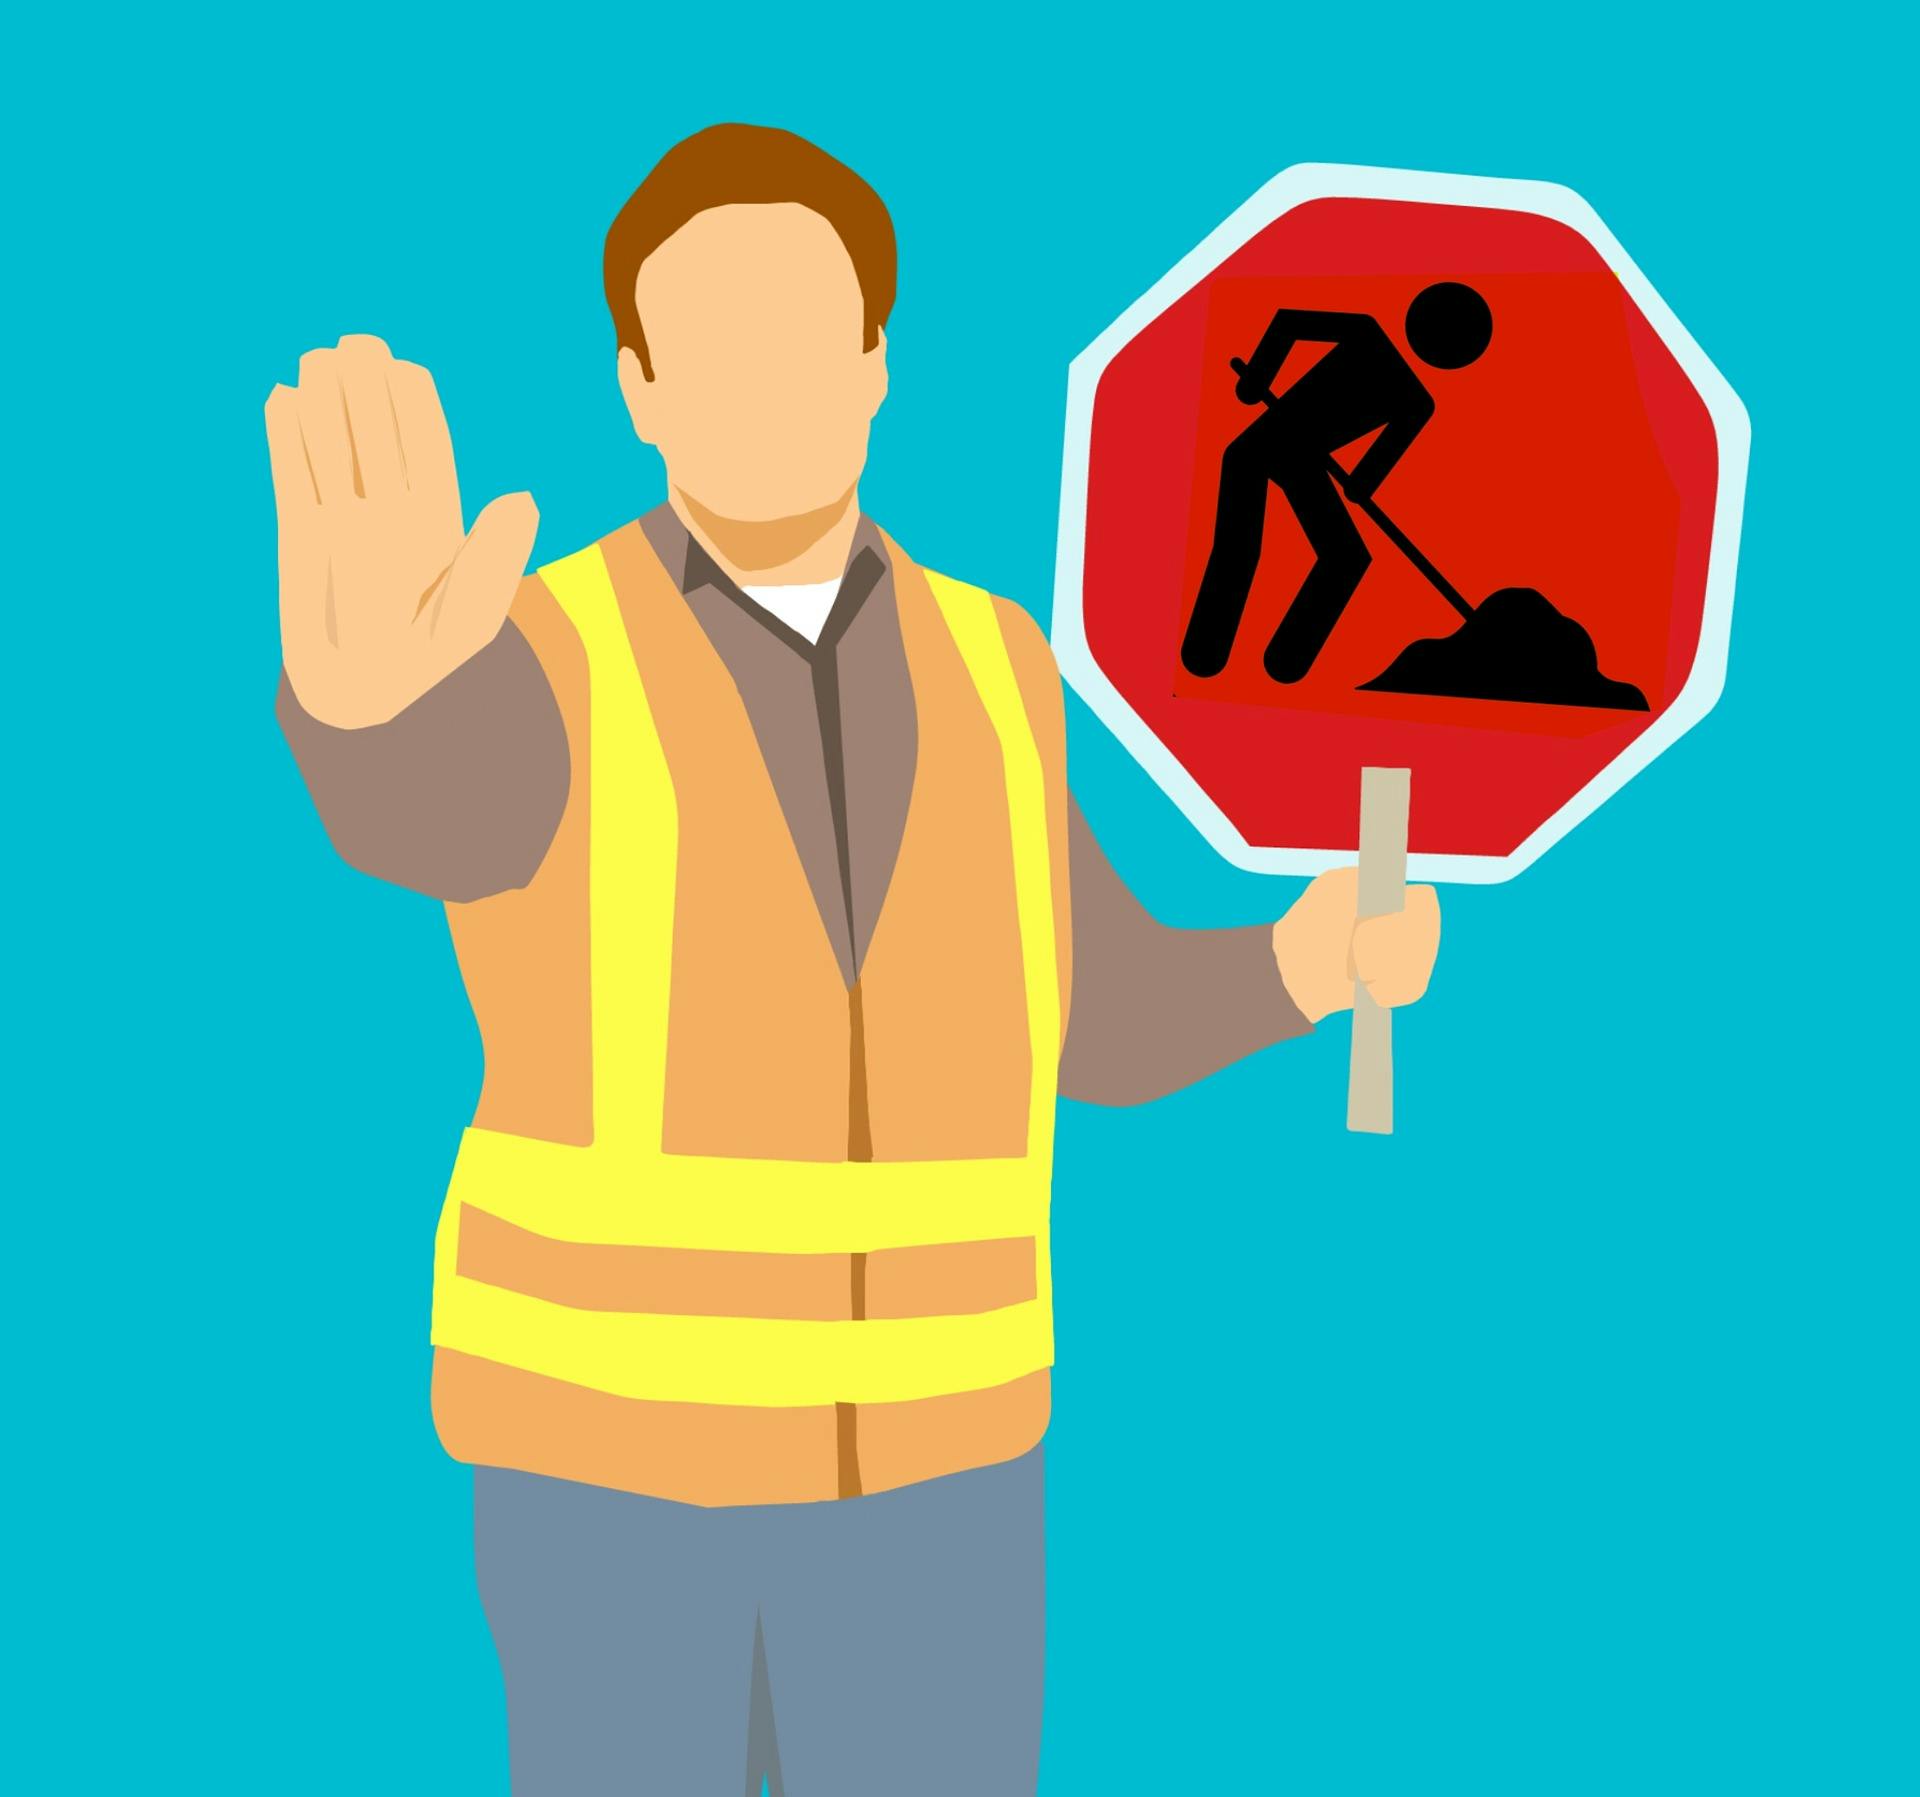 Highway construction warning